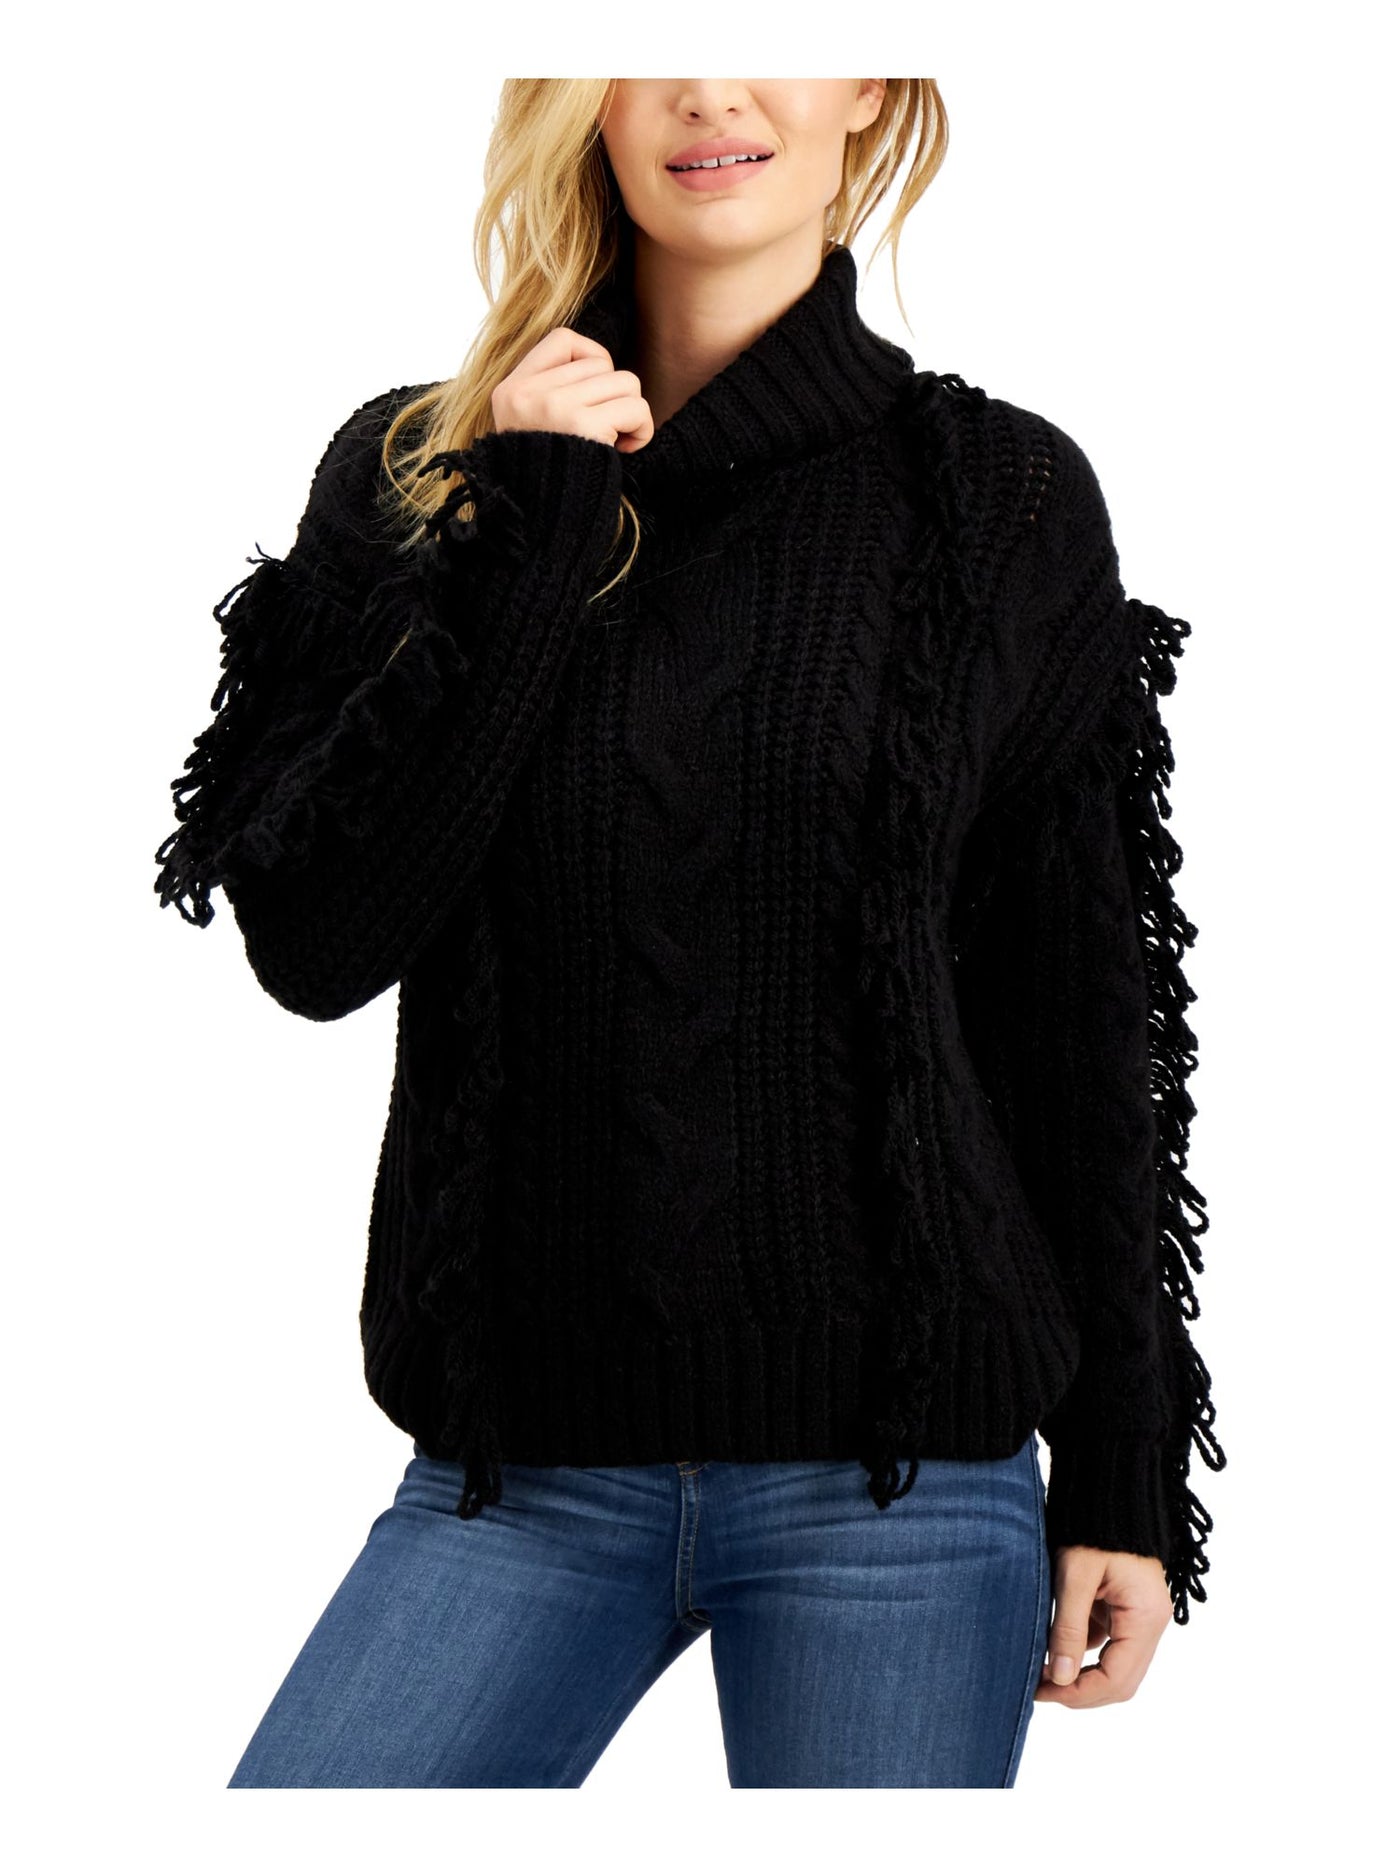 wynter Womens Black Fringed Drop Shoulder Long Sleeve Cowl Neck Sweater XL